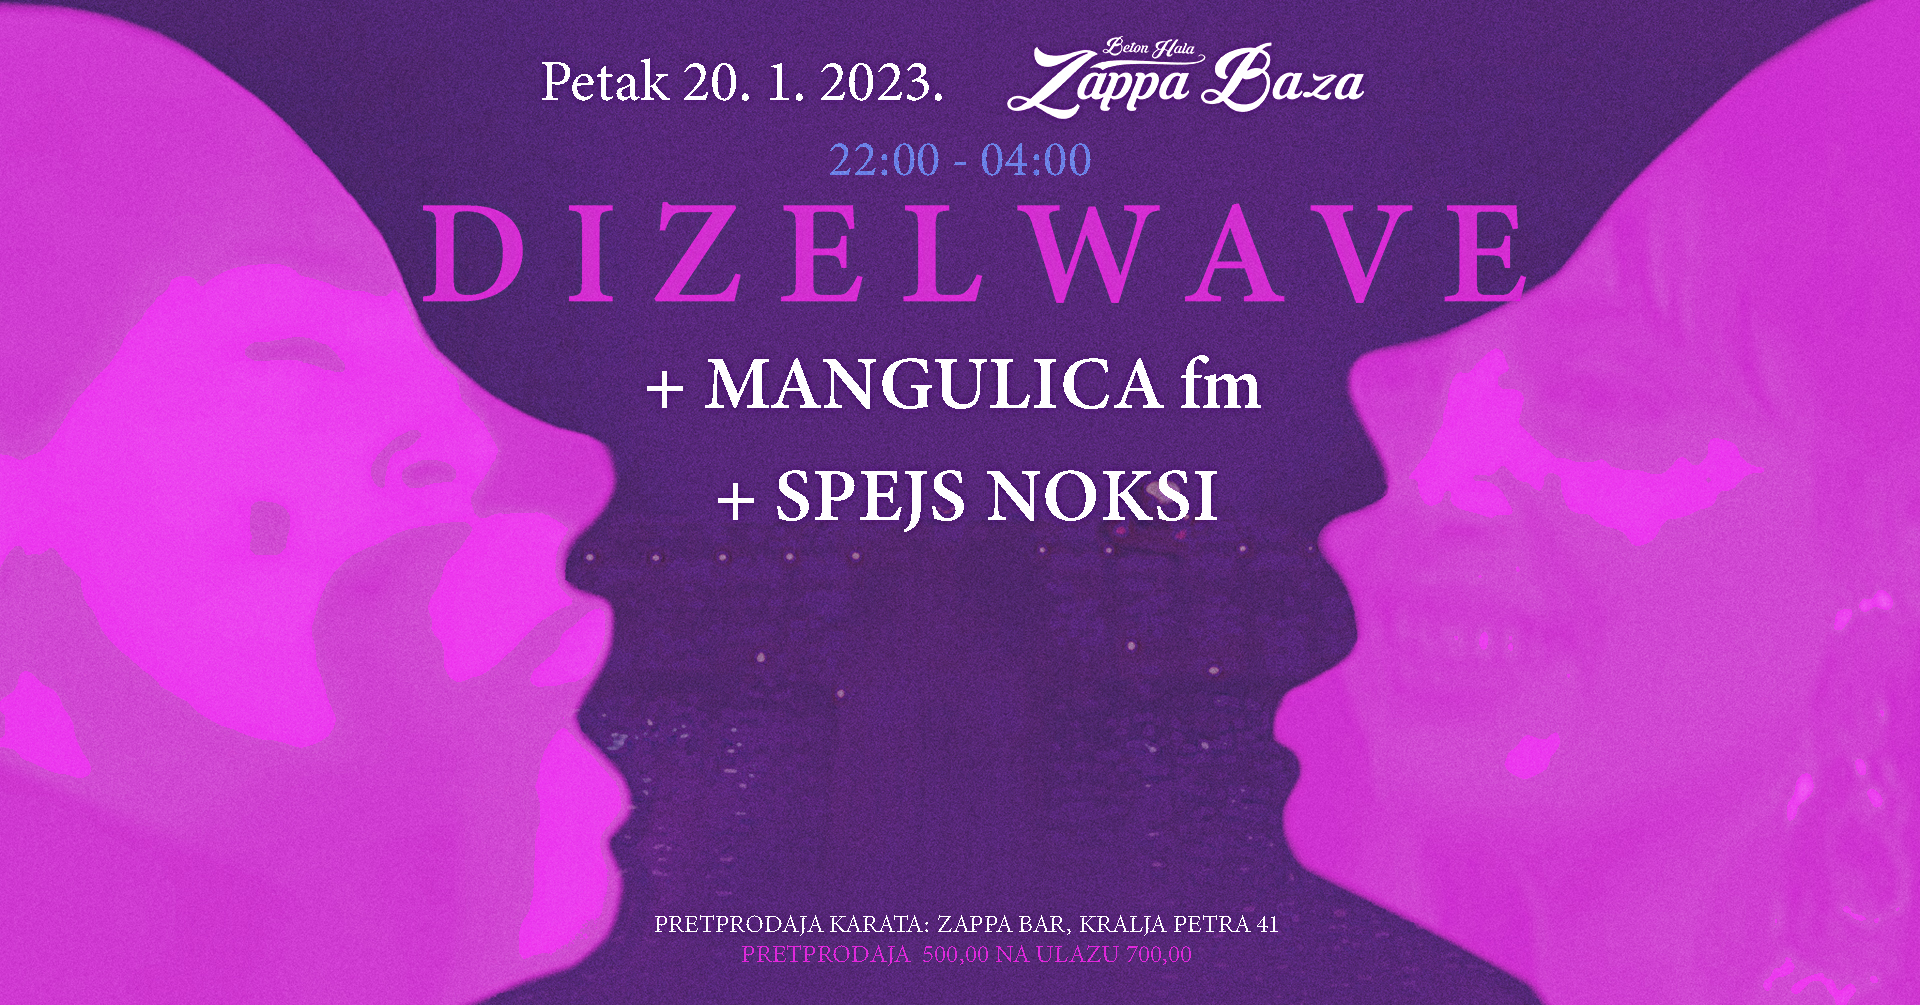 DIZELWAVE – Mangulica fm / Spejs Noksi 20.01.2023 Zappa Baza